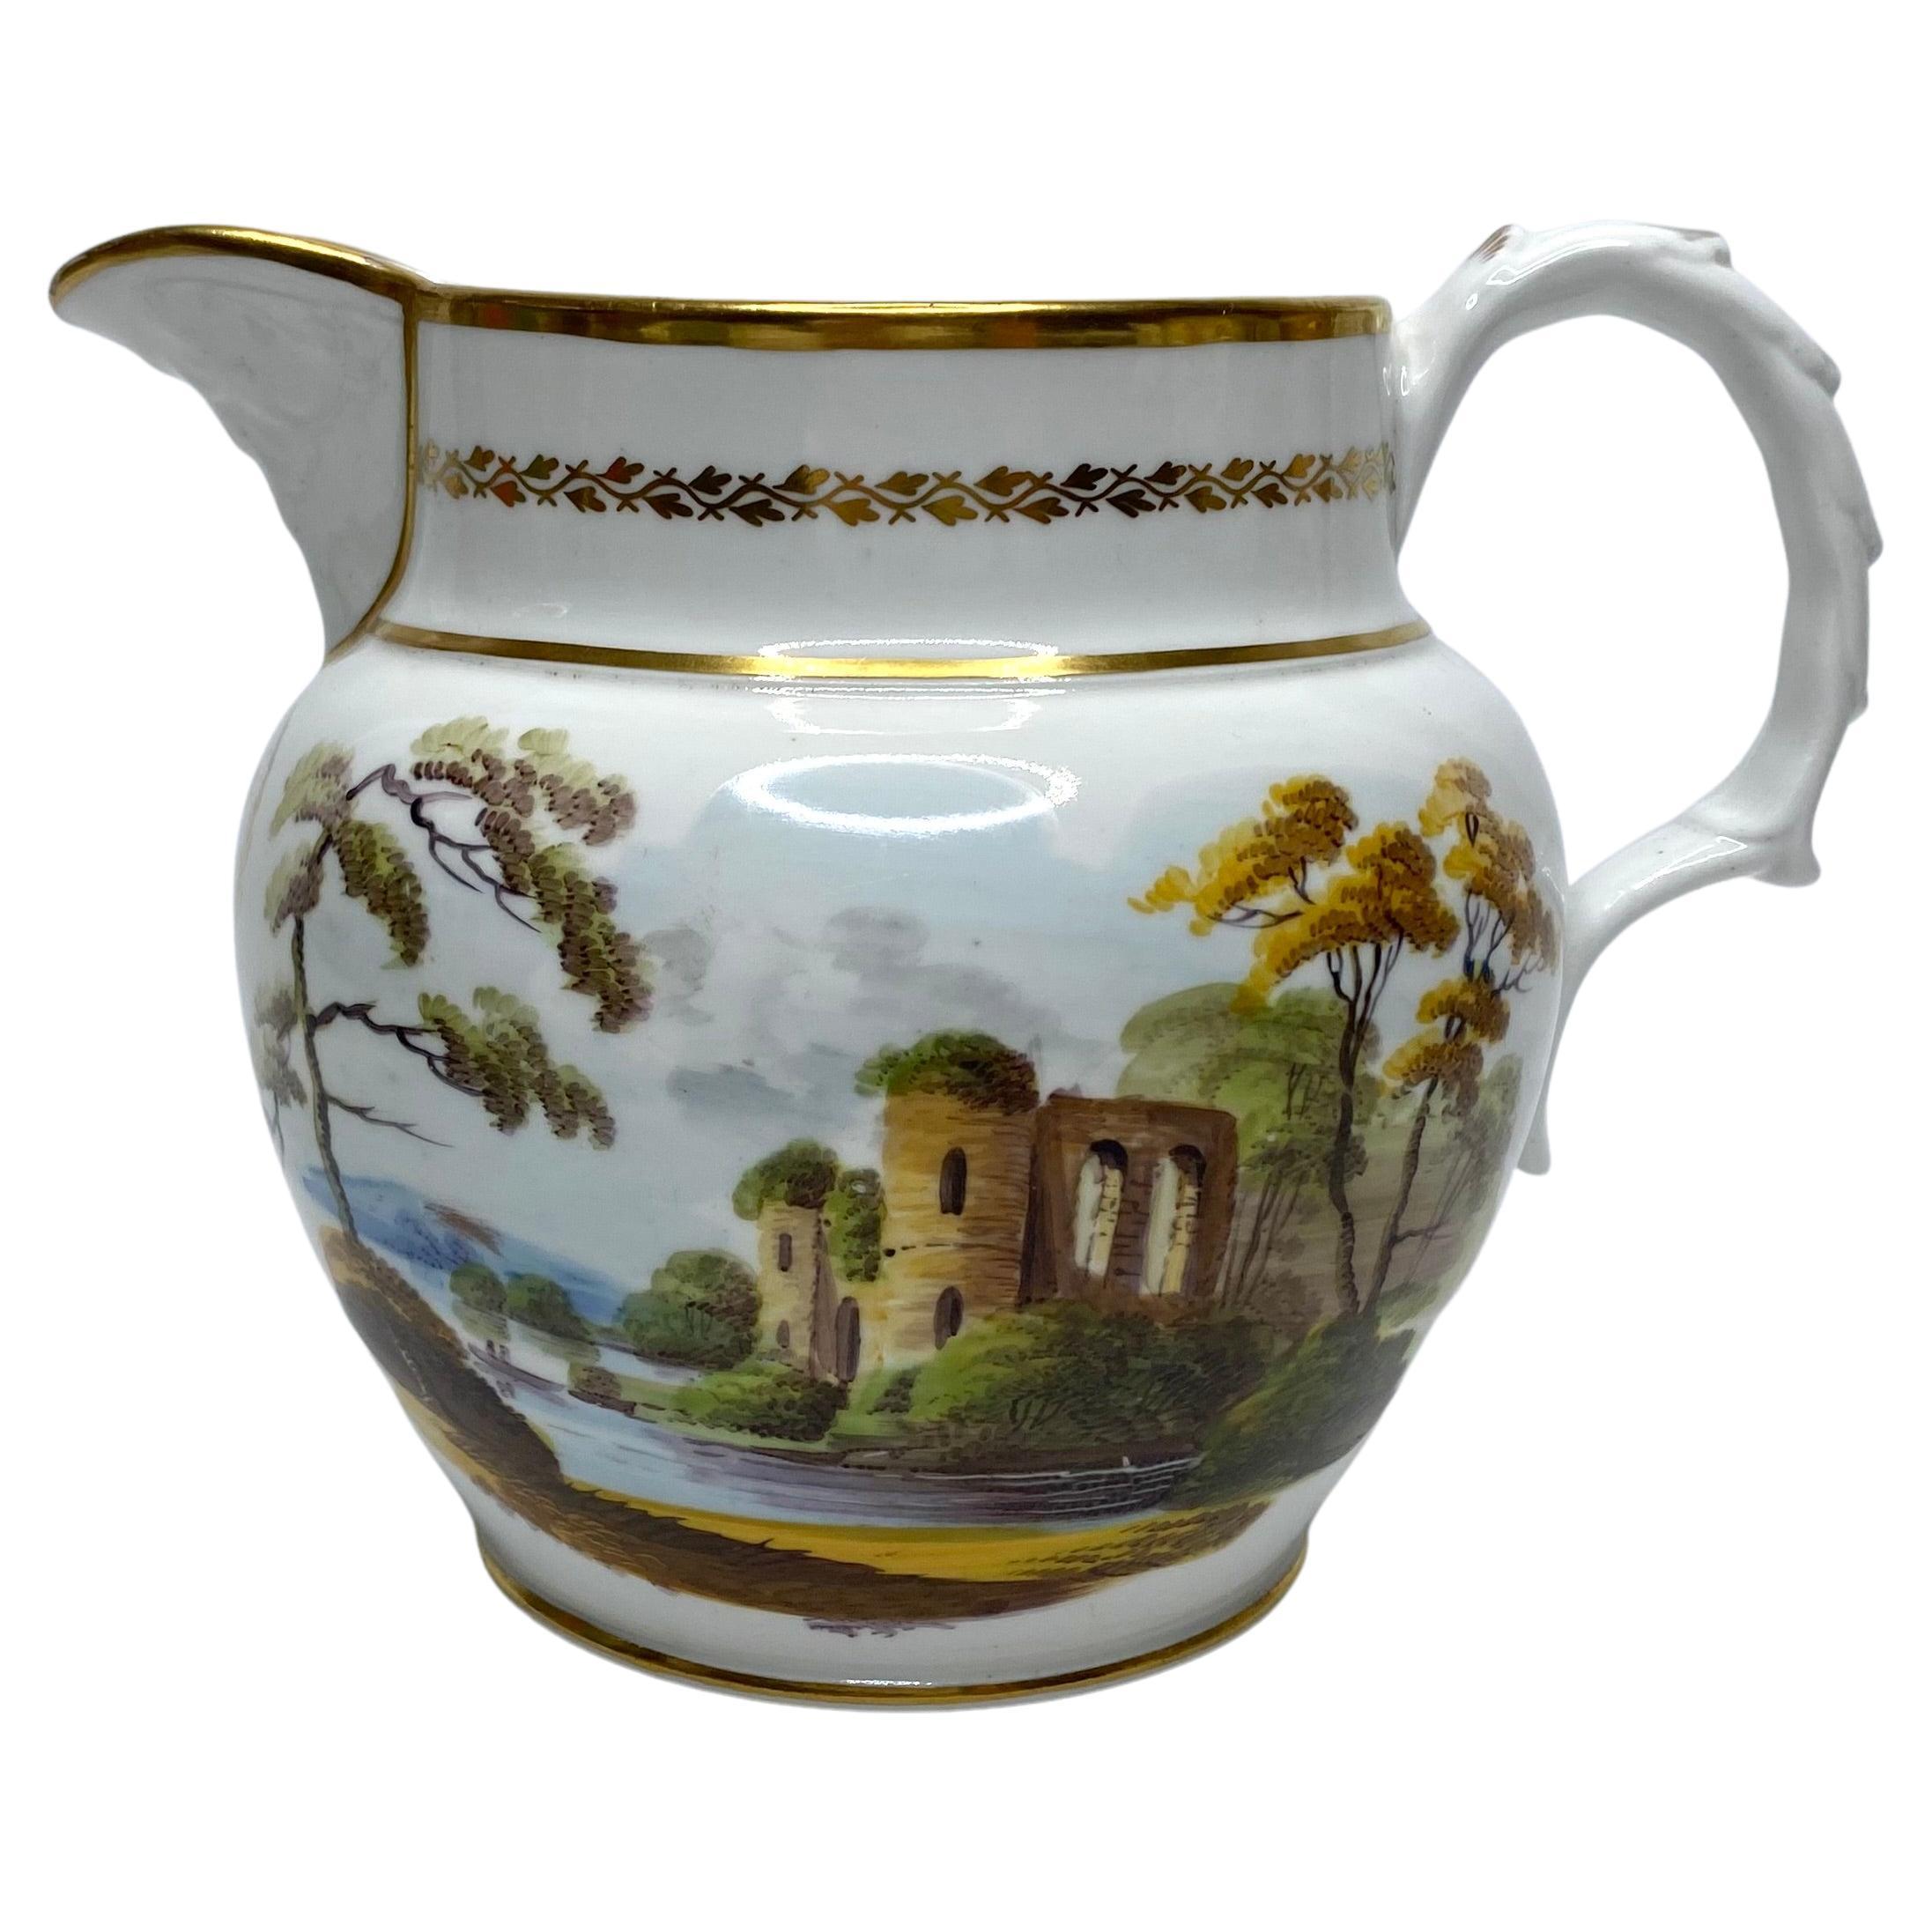 New Hall bone china water jug, ‘JH’, c. 1815.